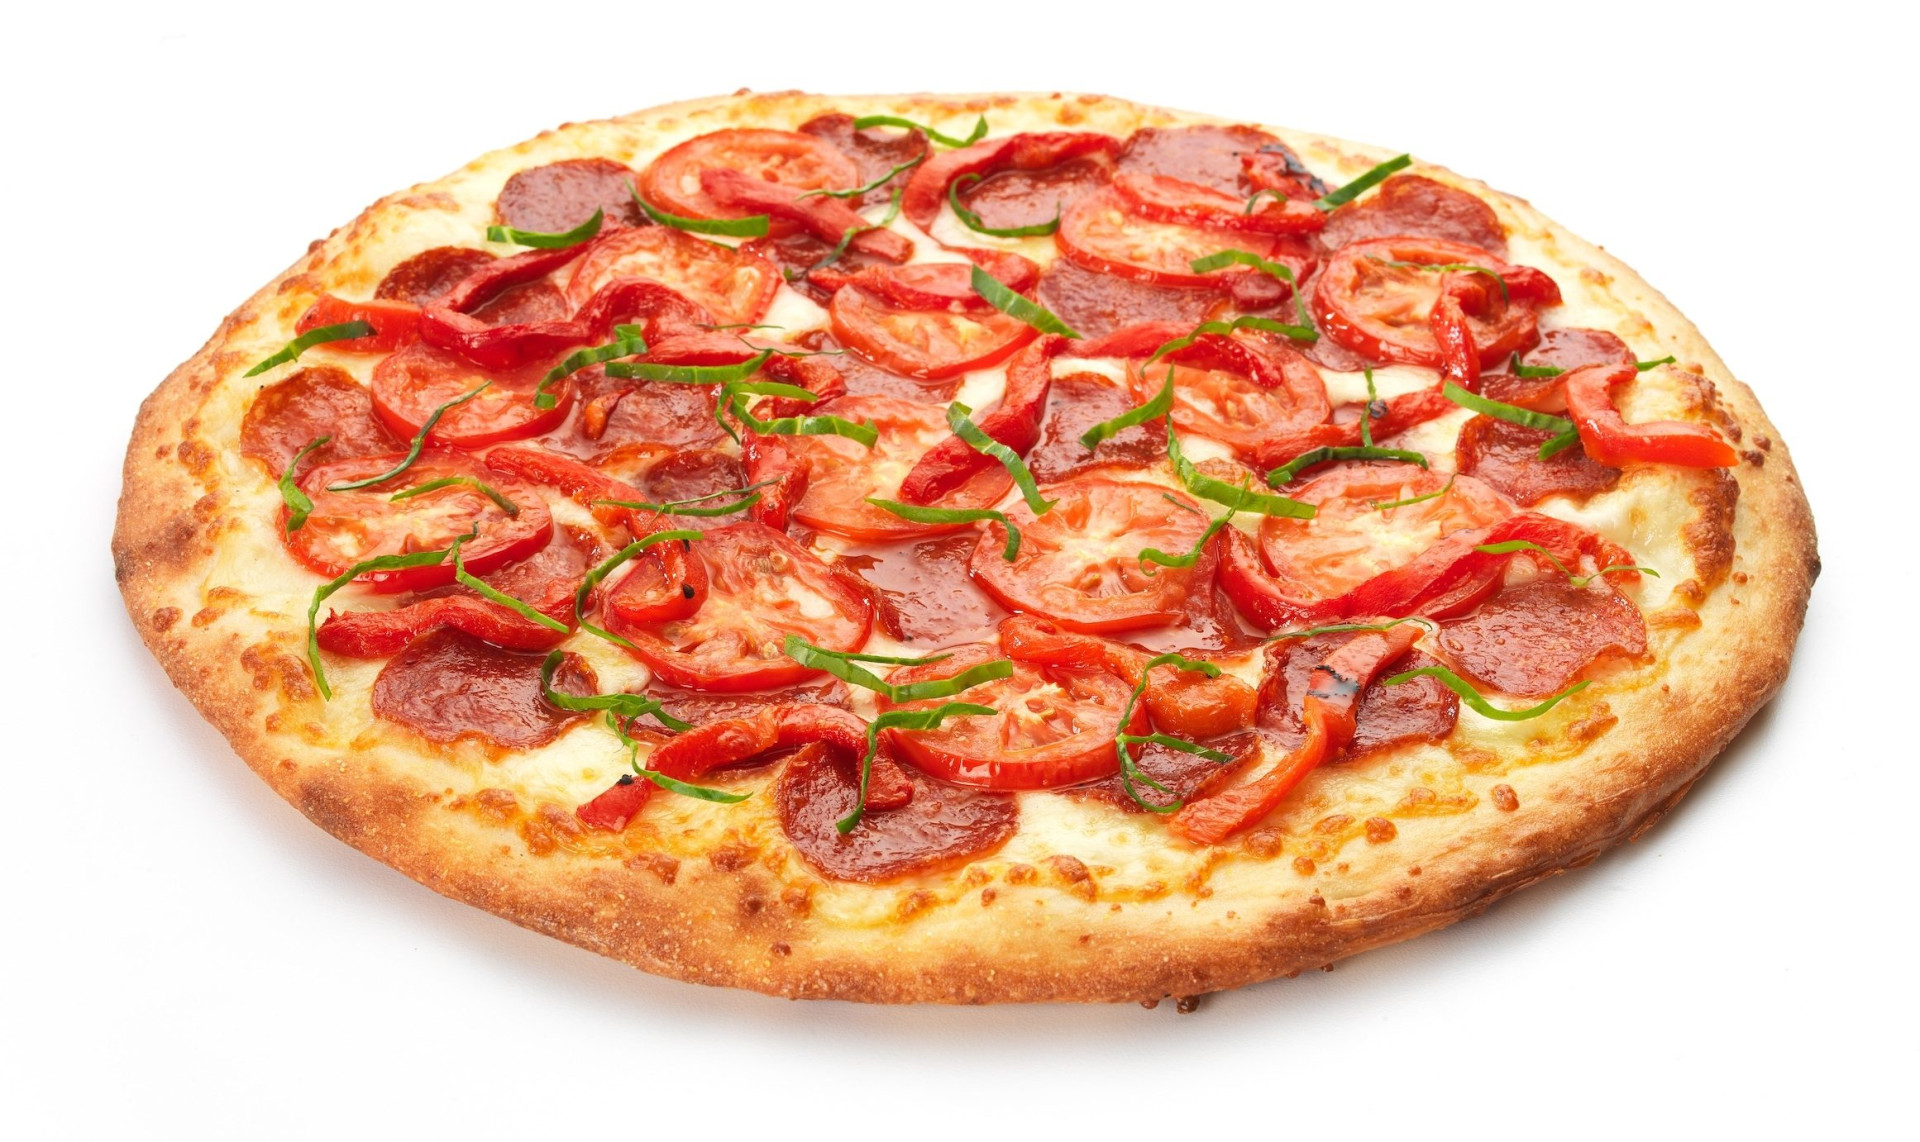 фото пицца пепперони на белом фоне фото 52